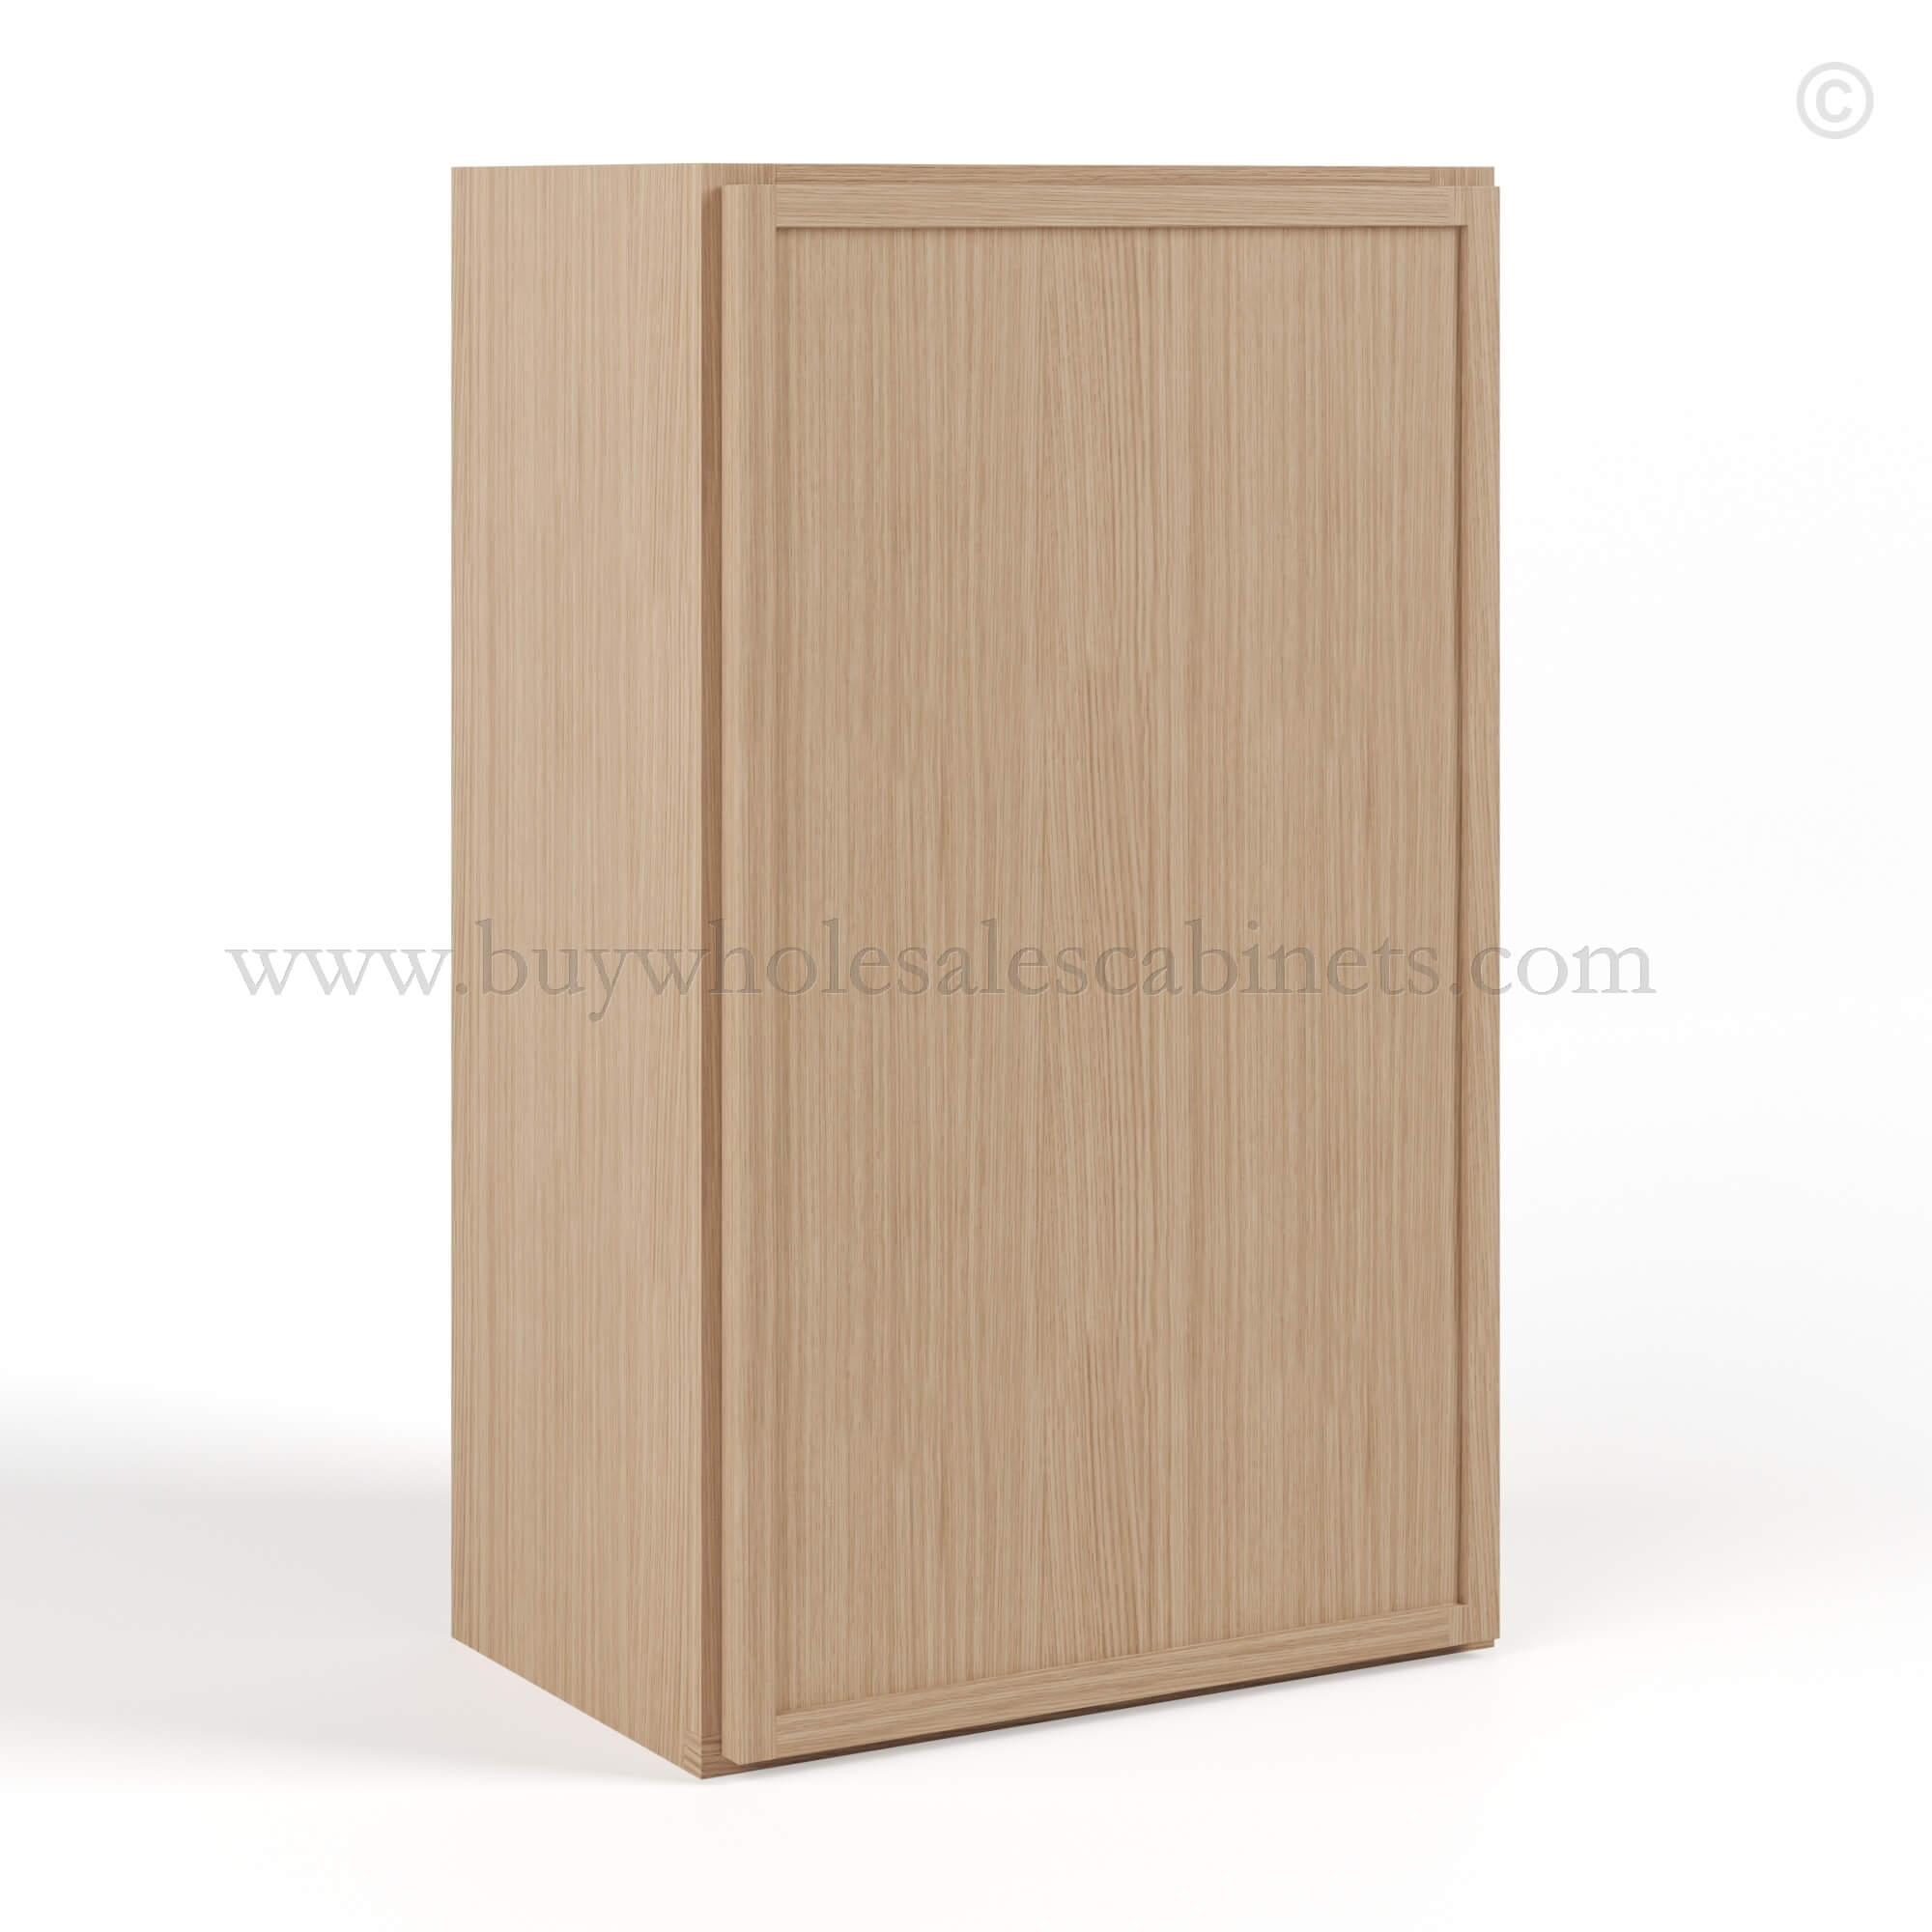 Slim Oak Shaker 30H Single Door Wall Cabinet, rta cabinets, wholesale cabinets